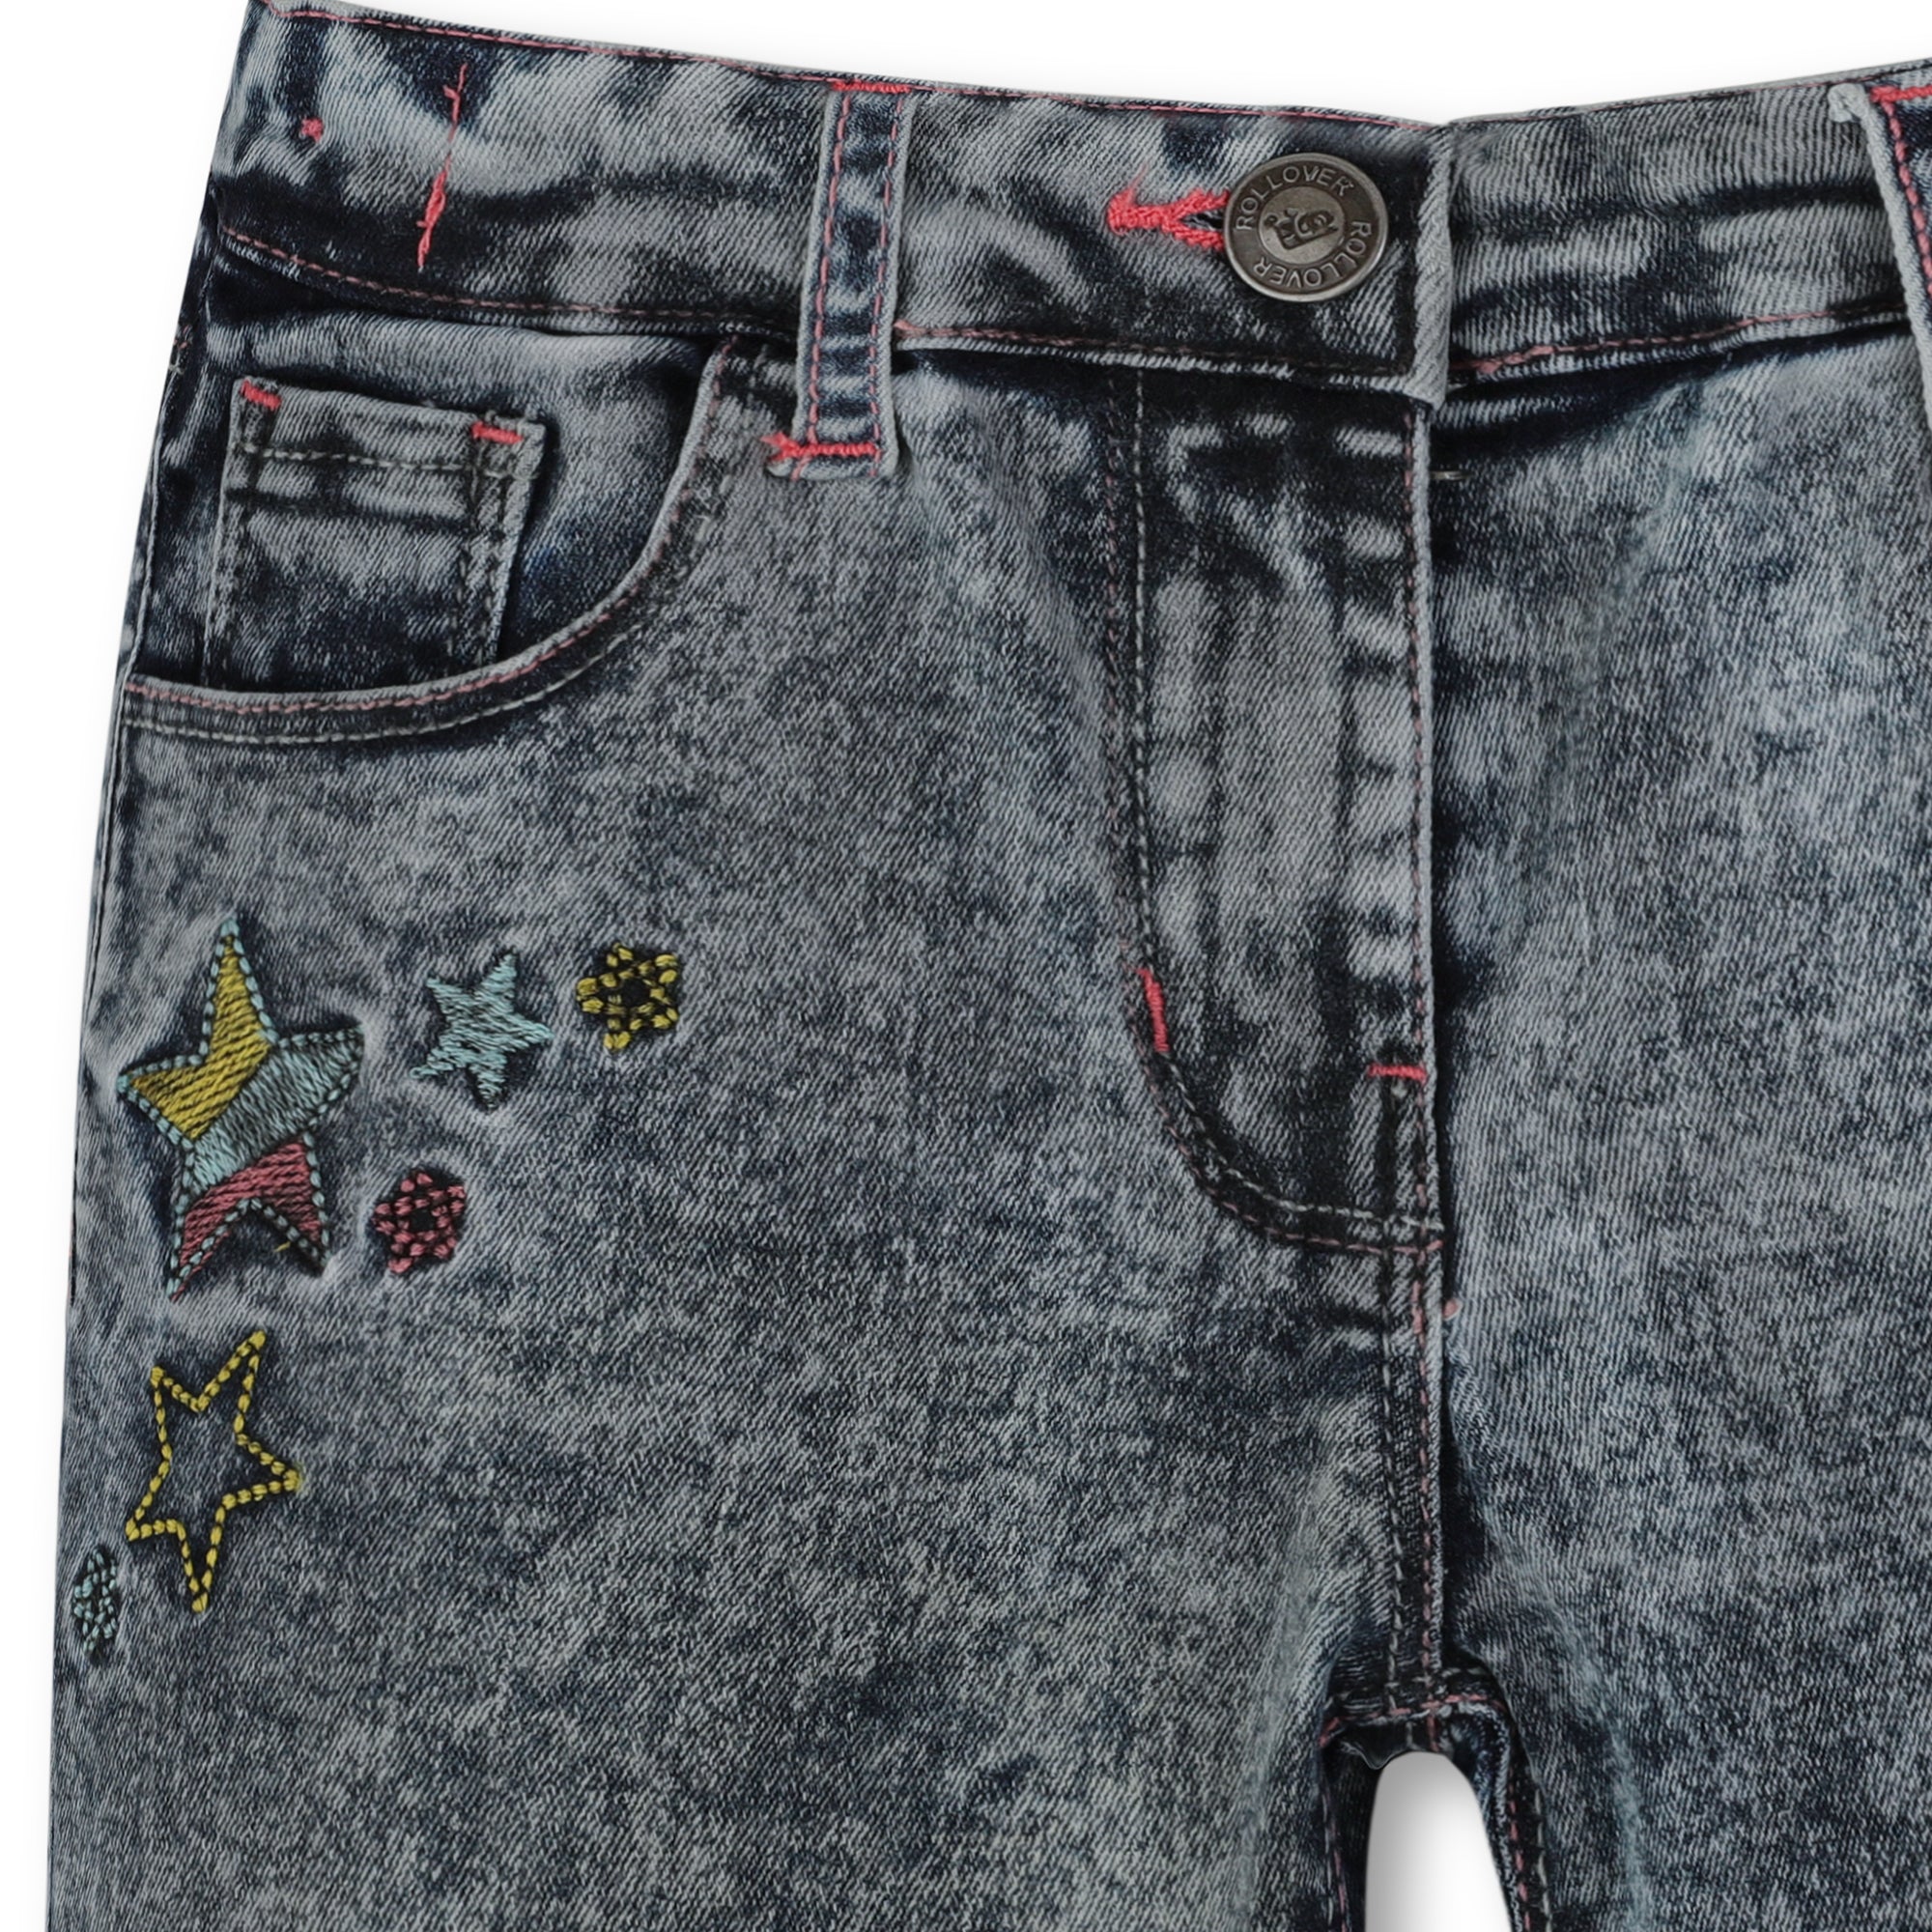 Charcoal Grey Denim Shorts for Girls